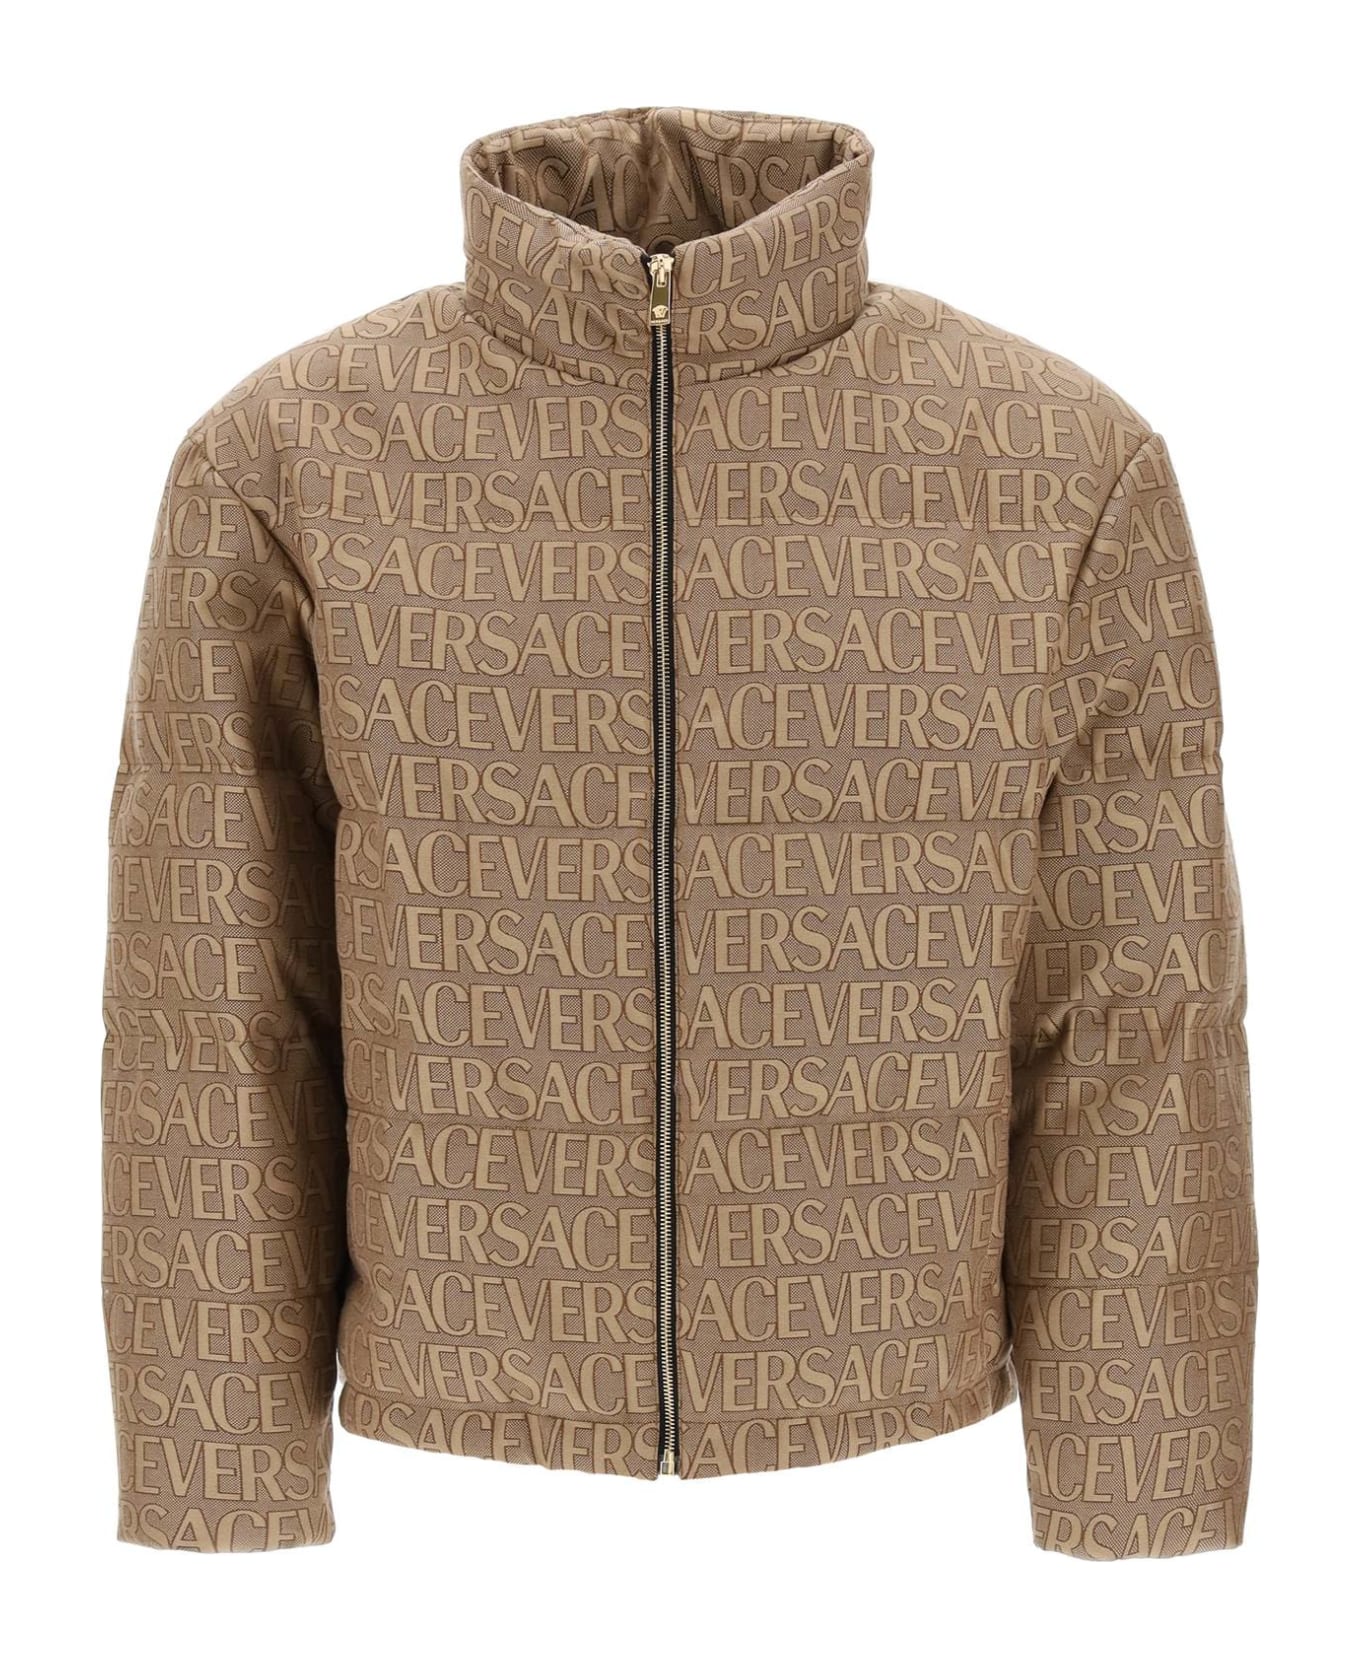 Versace Canvas Puffer Jacket - Beige ジャケット